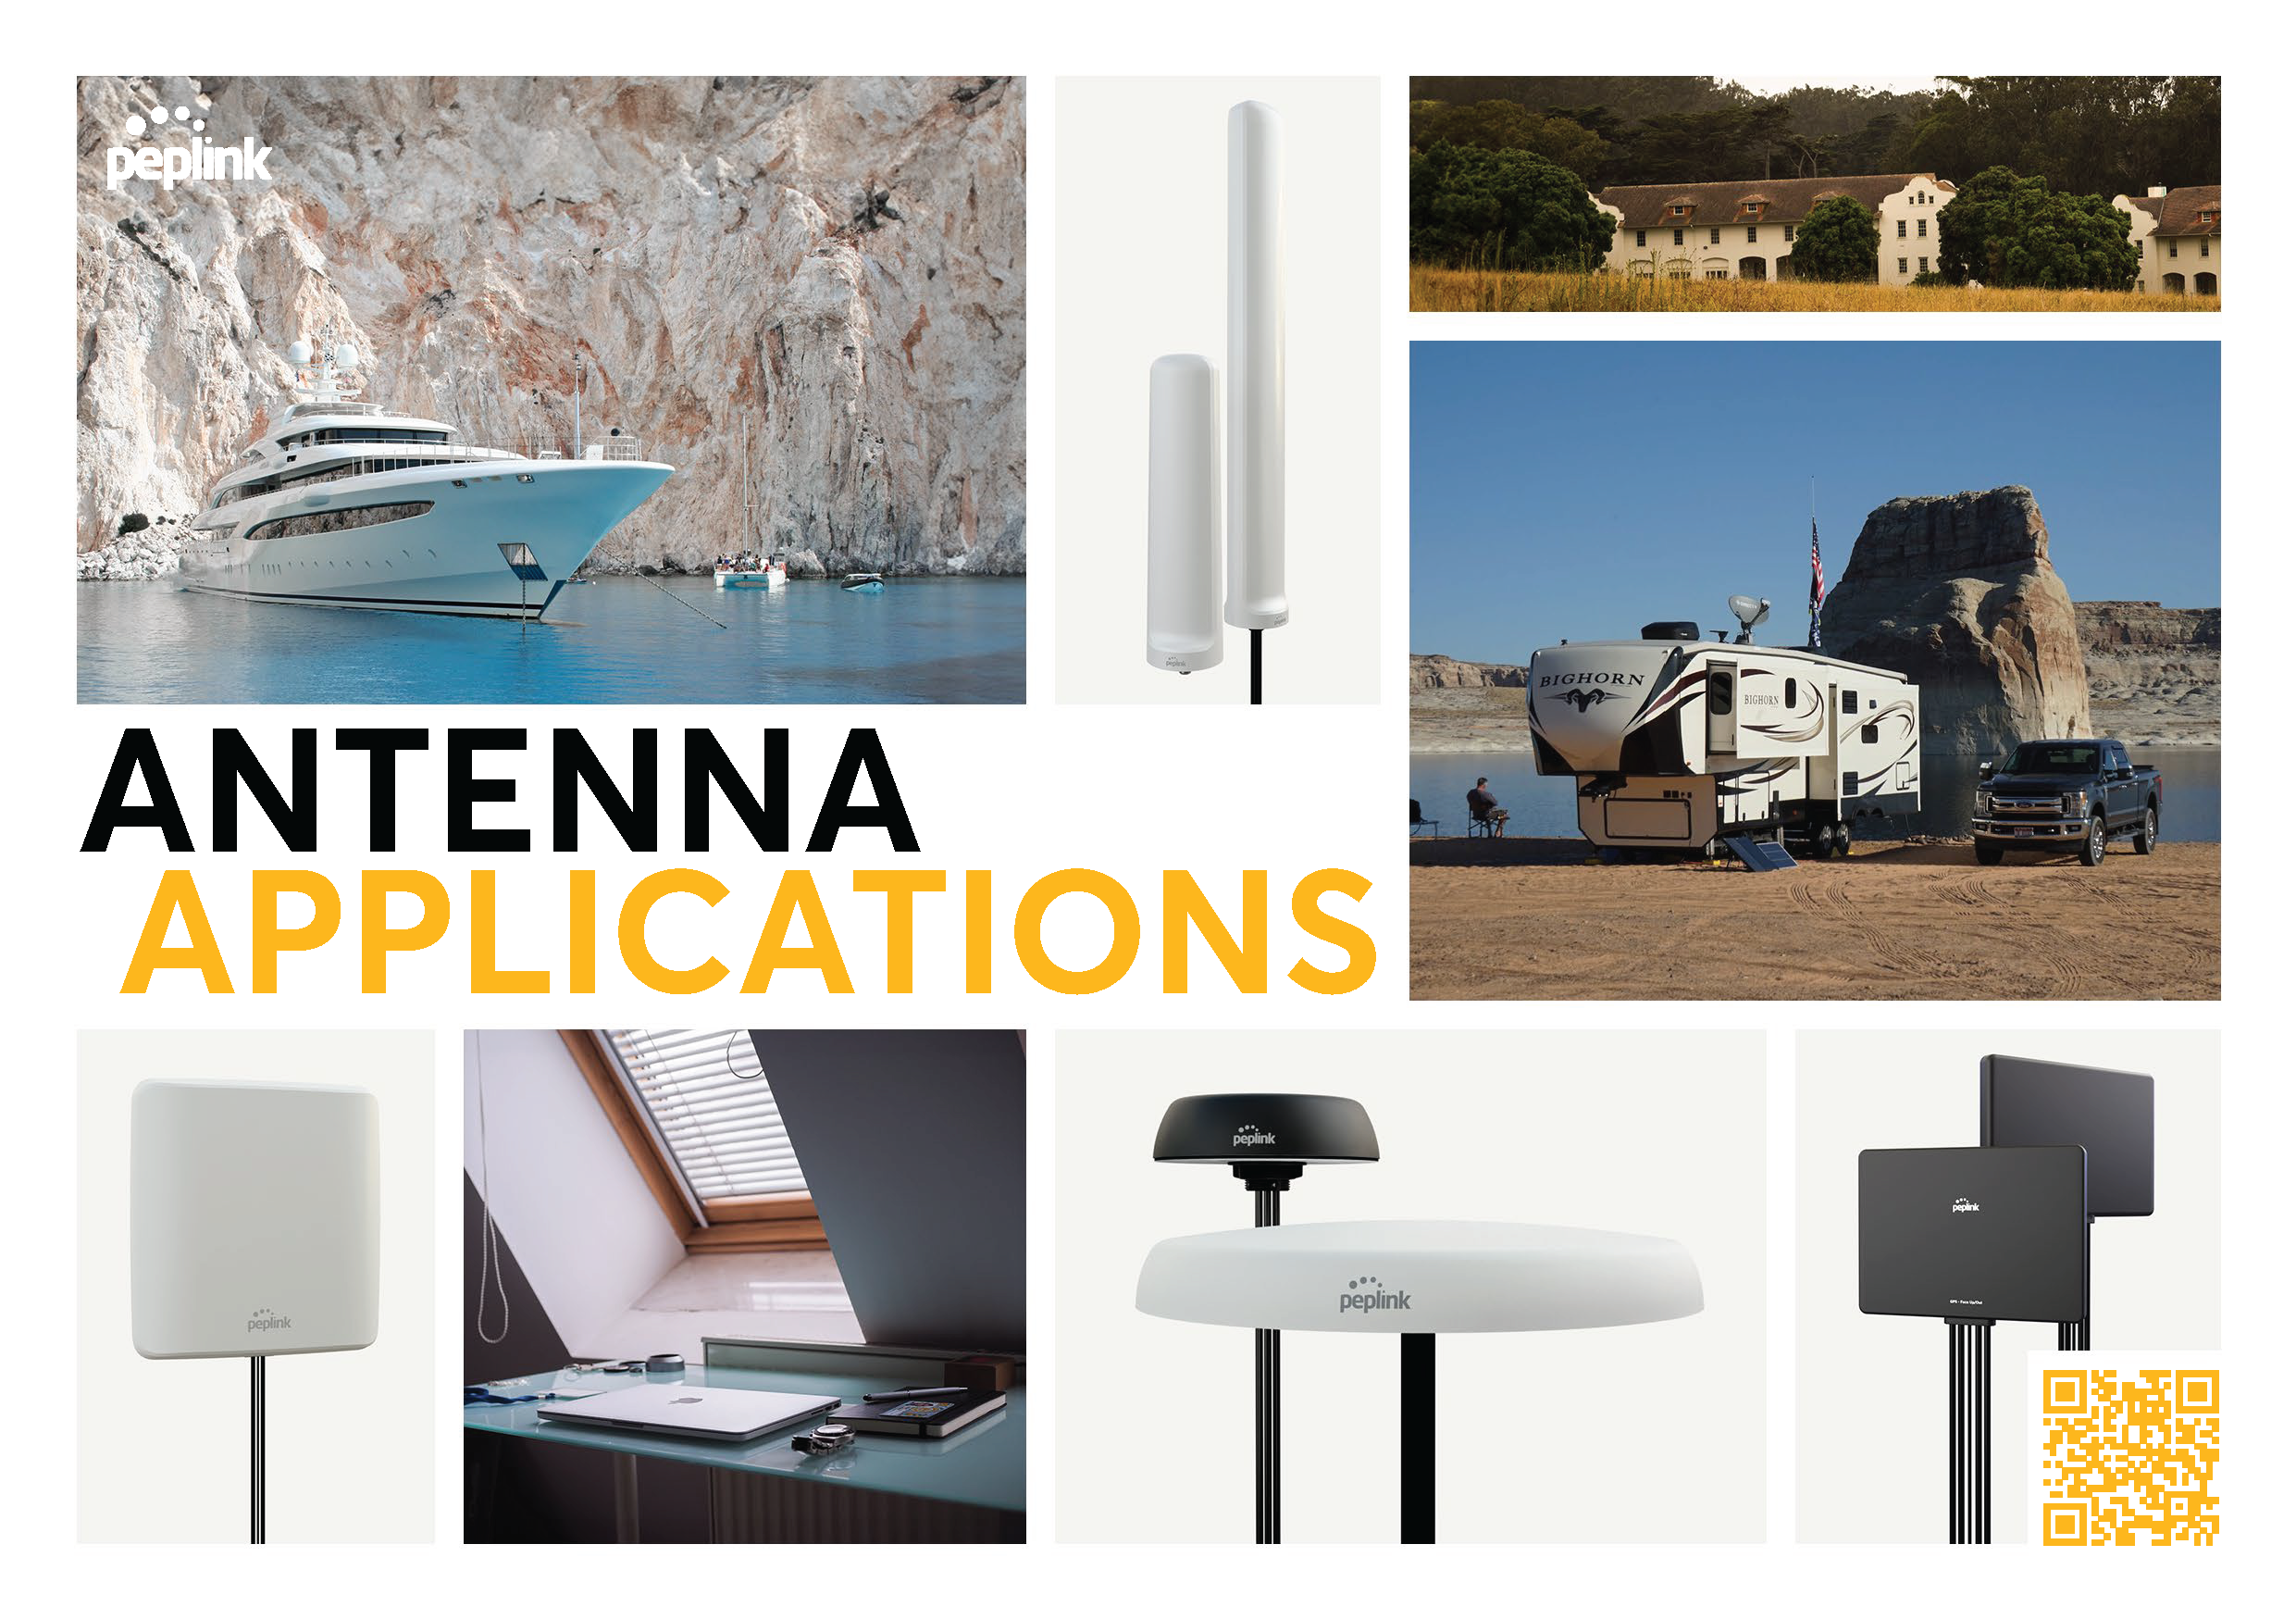 Peplink Antenna Application Brochure Cover